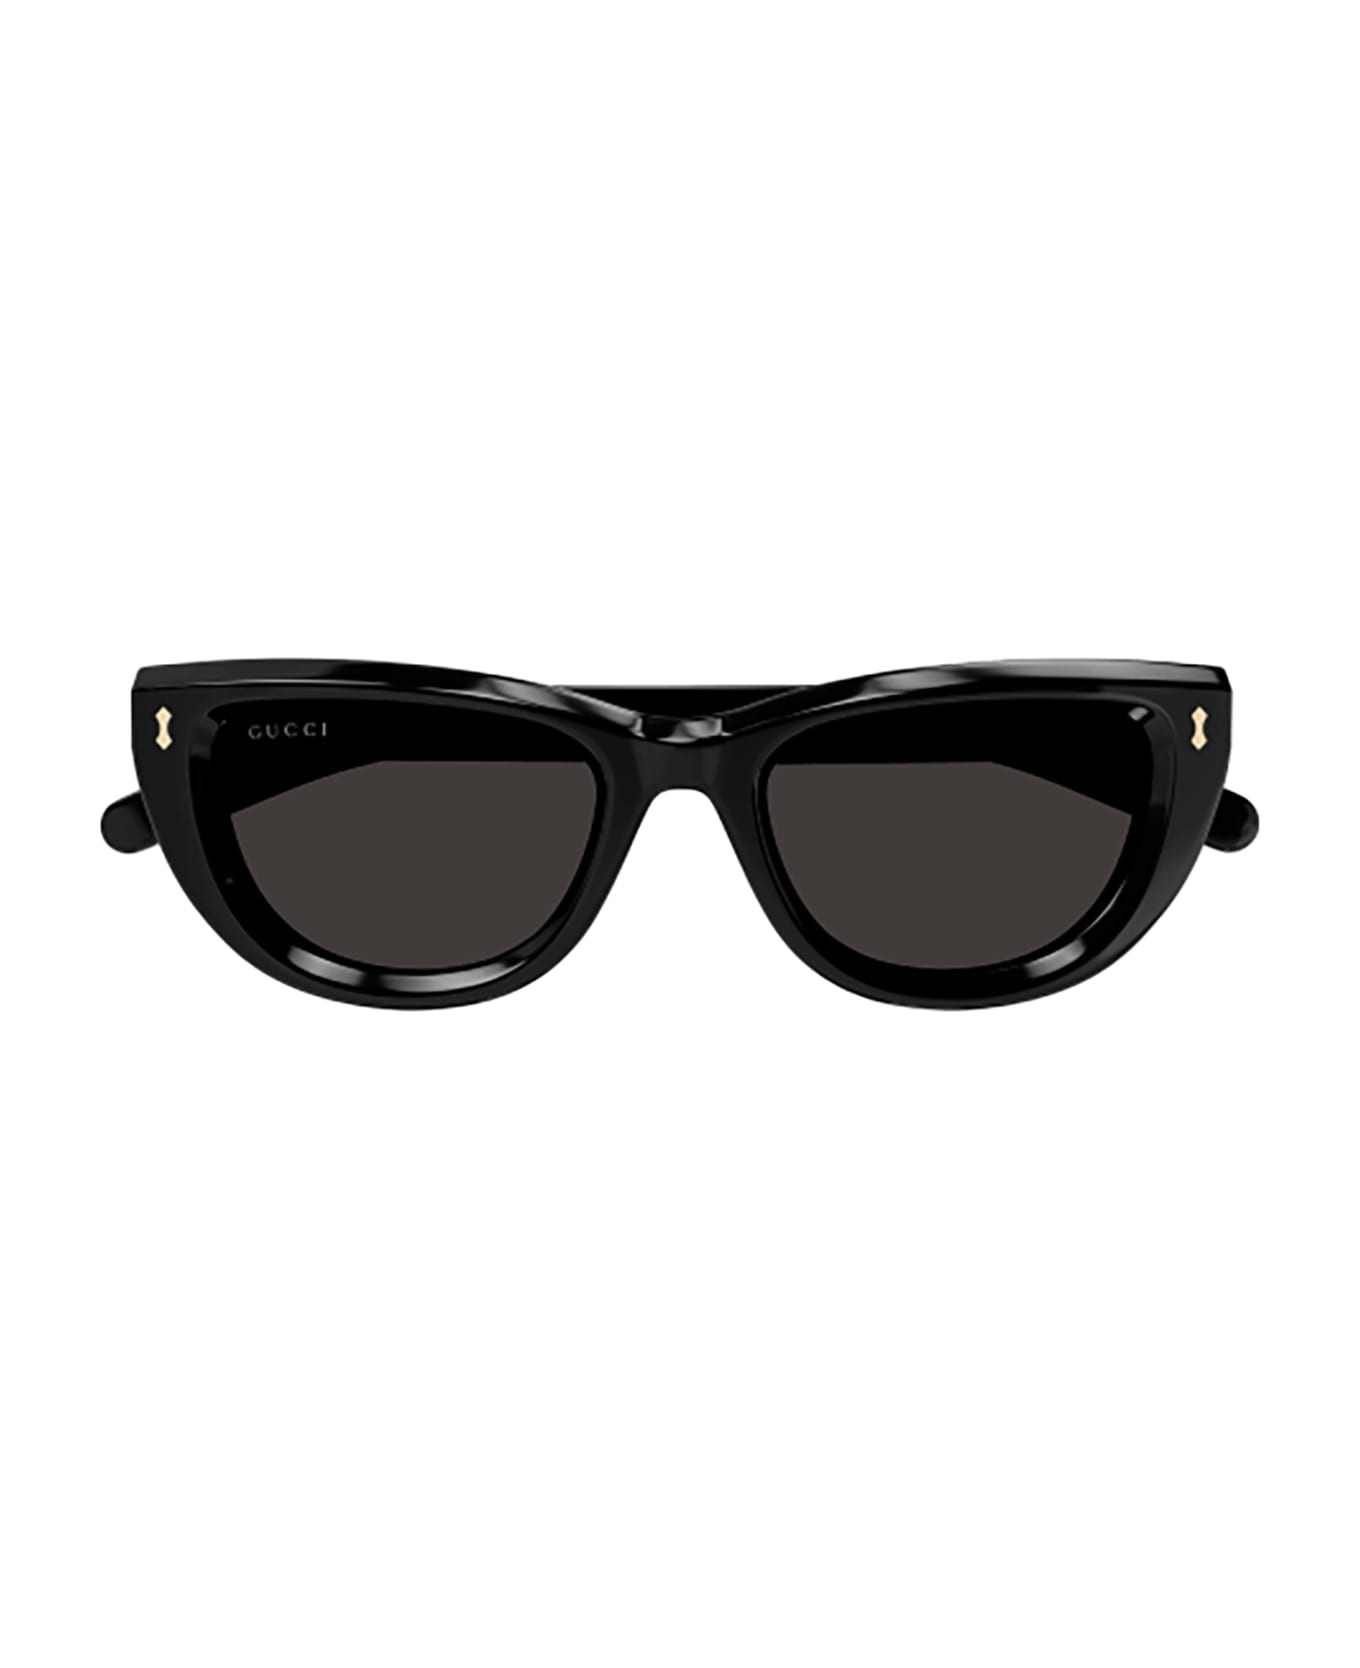 Gucci Eyewear GG1521S Sunglasses - Black Black Grey